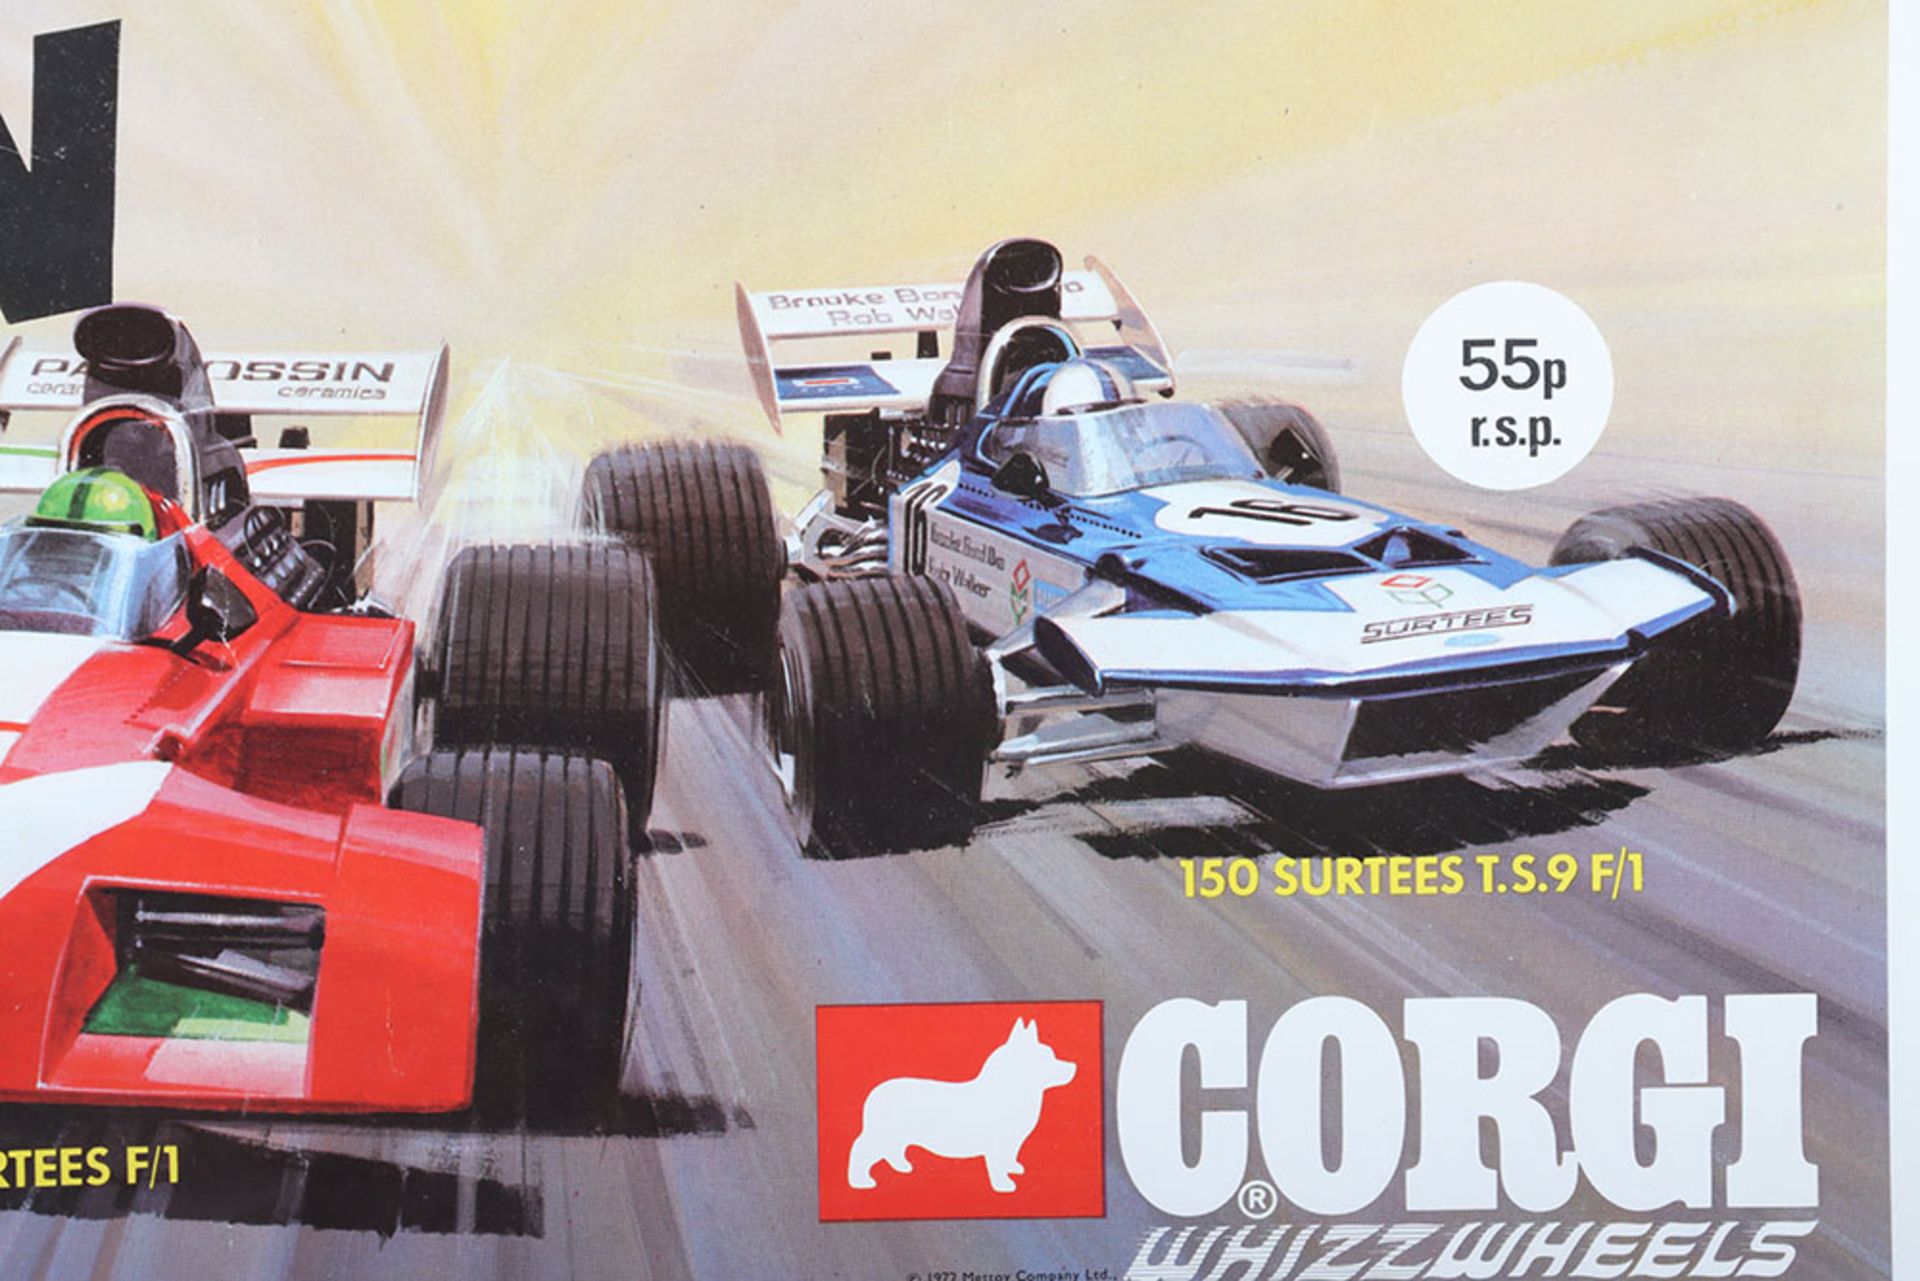 Corgi Whizzwheels 150 Surtees T.S.9 and 153 T.S.9B Team Surtees Formula 1 Racing Cars original Print - Image 2 of 3